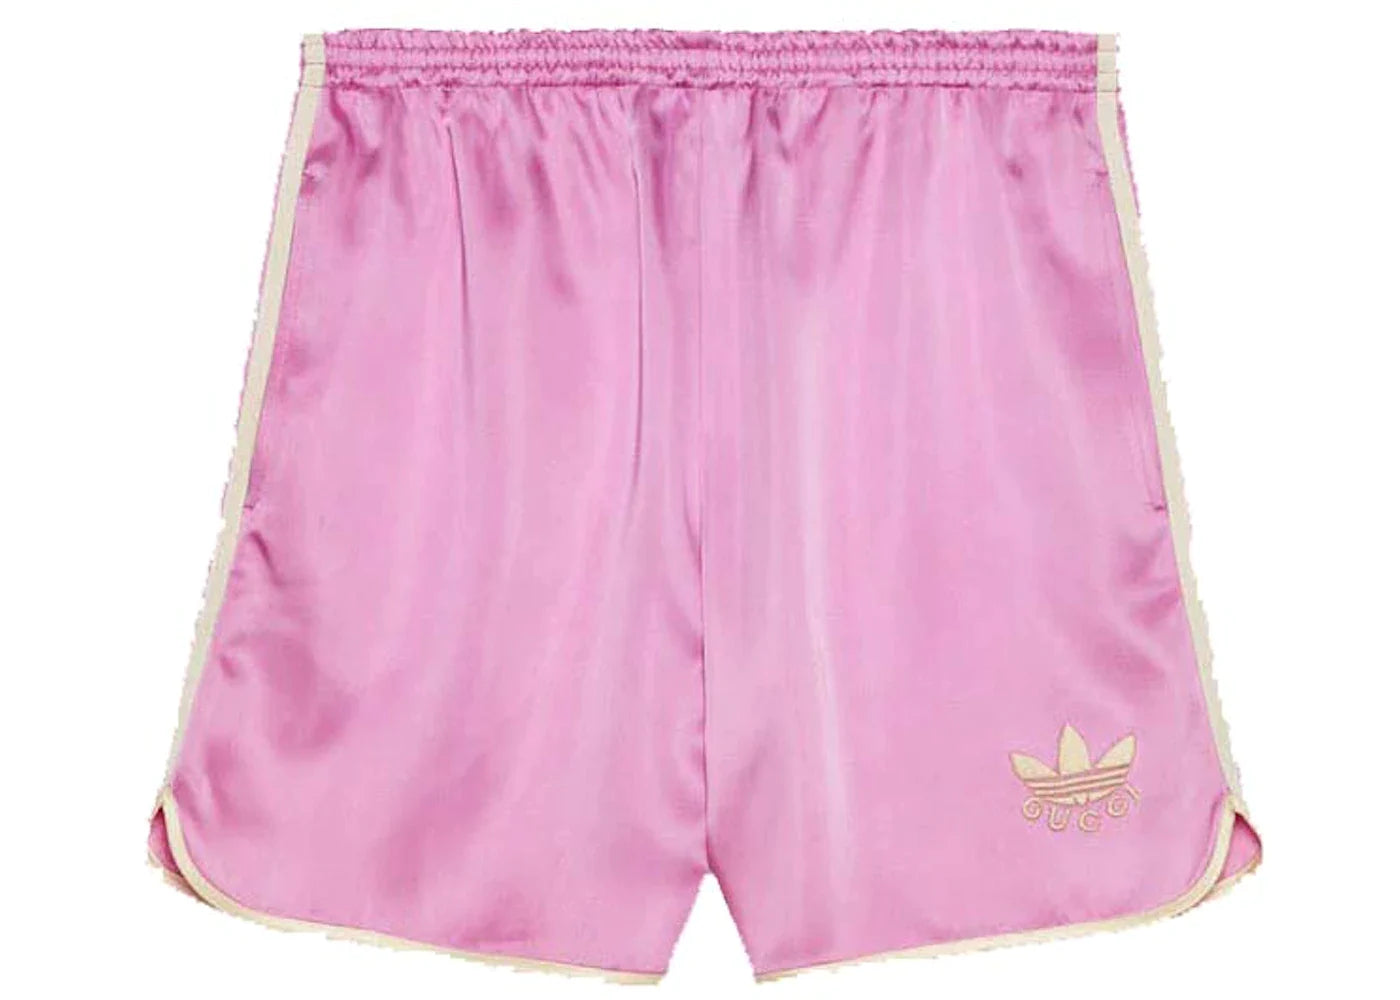 Gucci x adidas Trefoil Print Shorts Pink